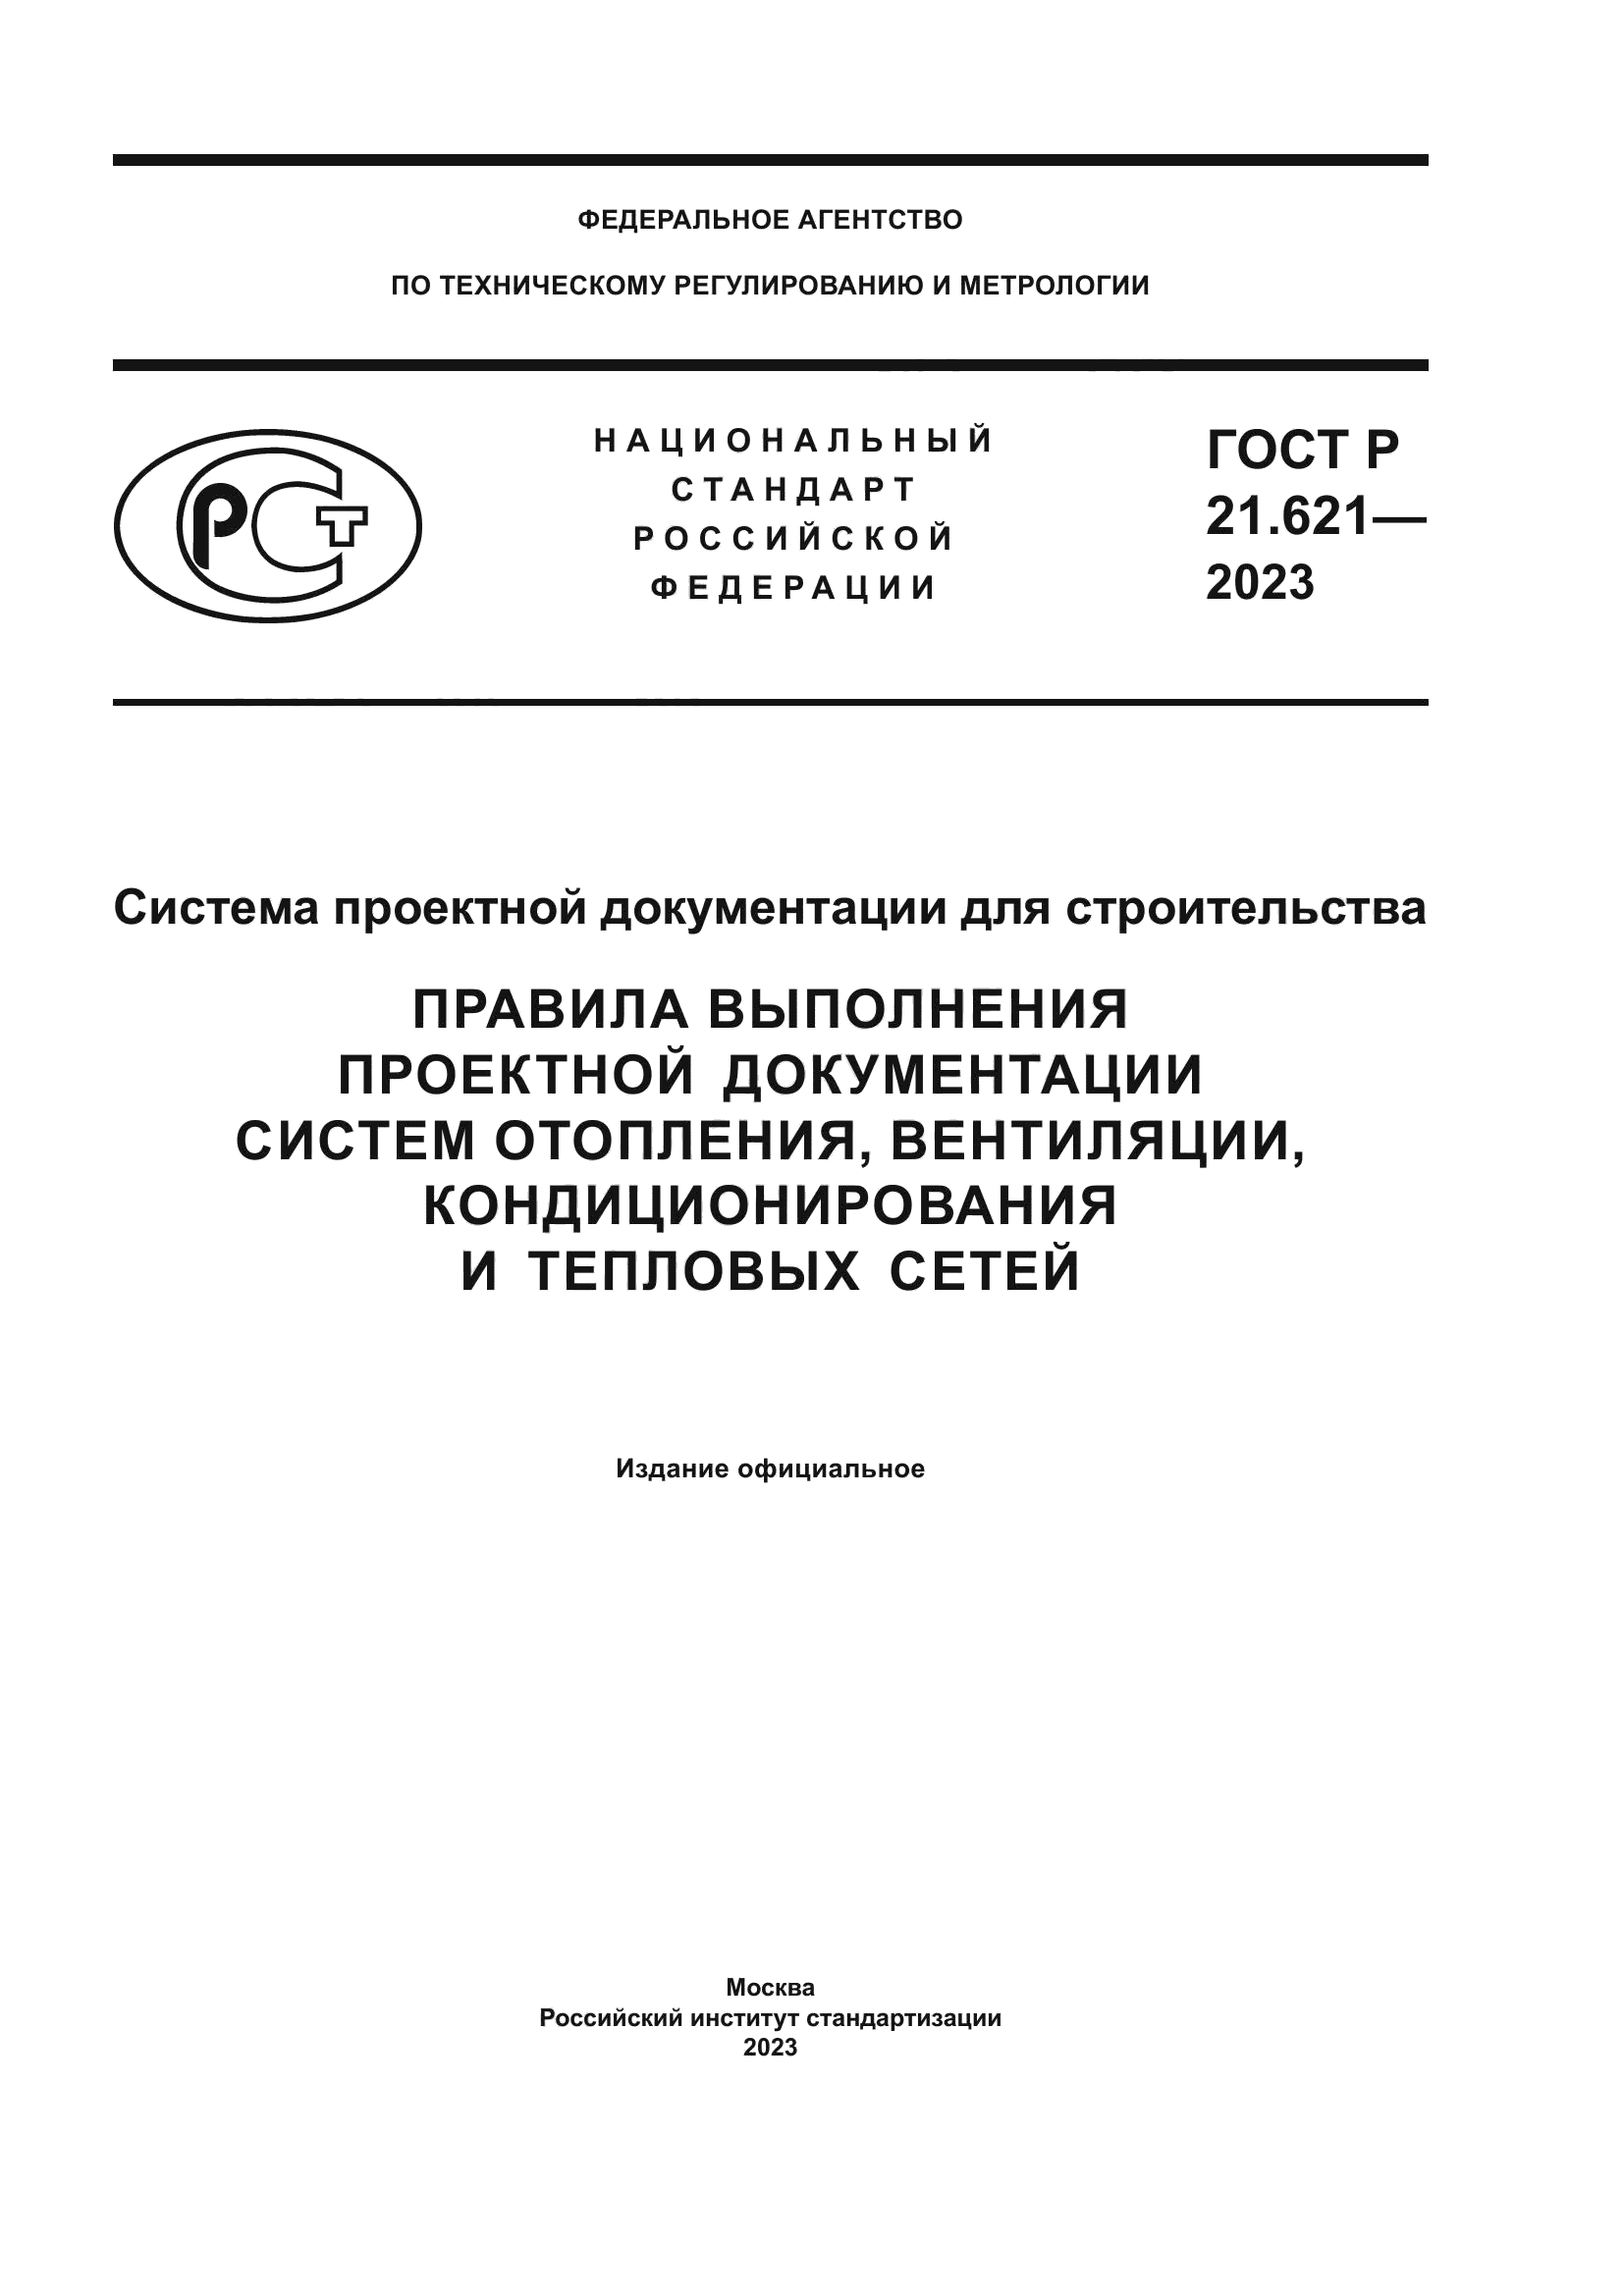 ГОСТ Р 21.621-2023